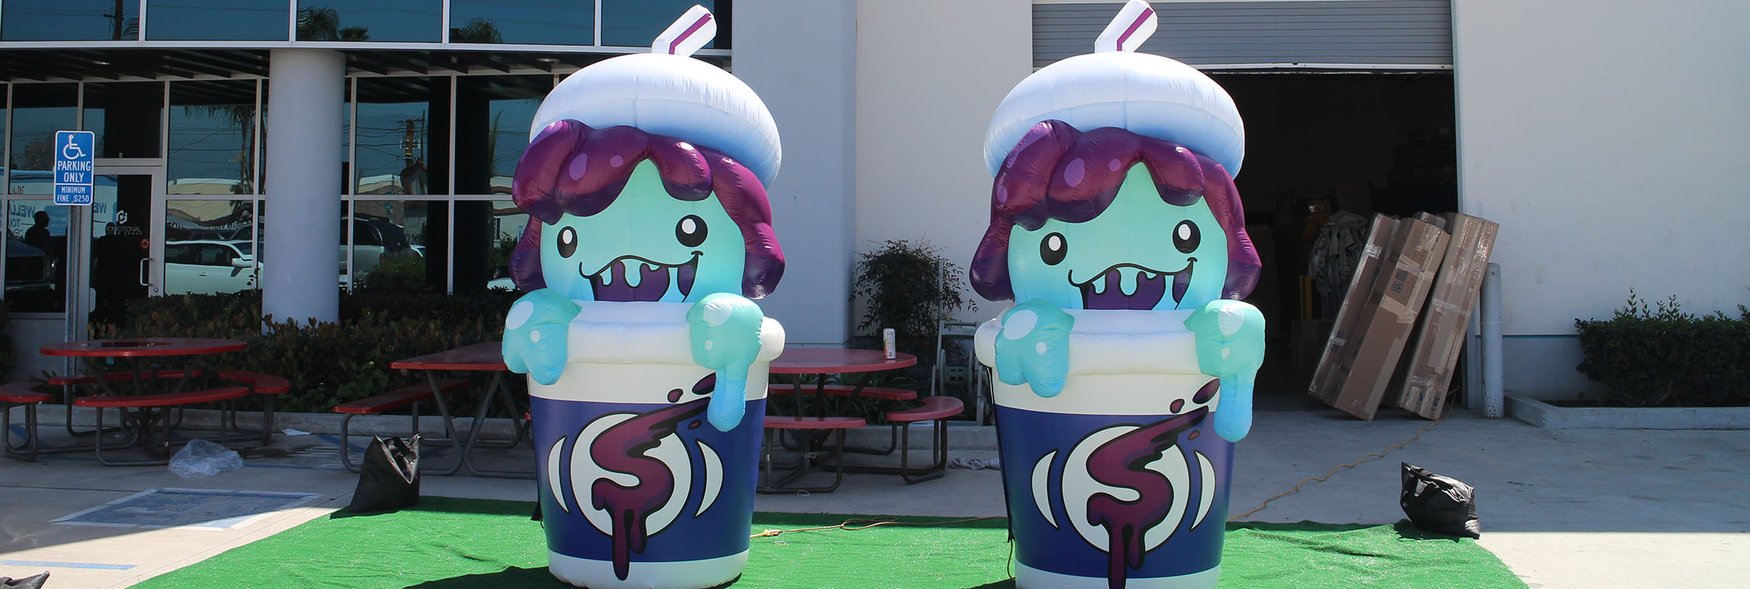 slushii-mascot-prop-inflatables